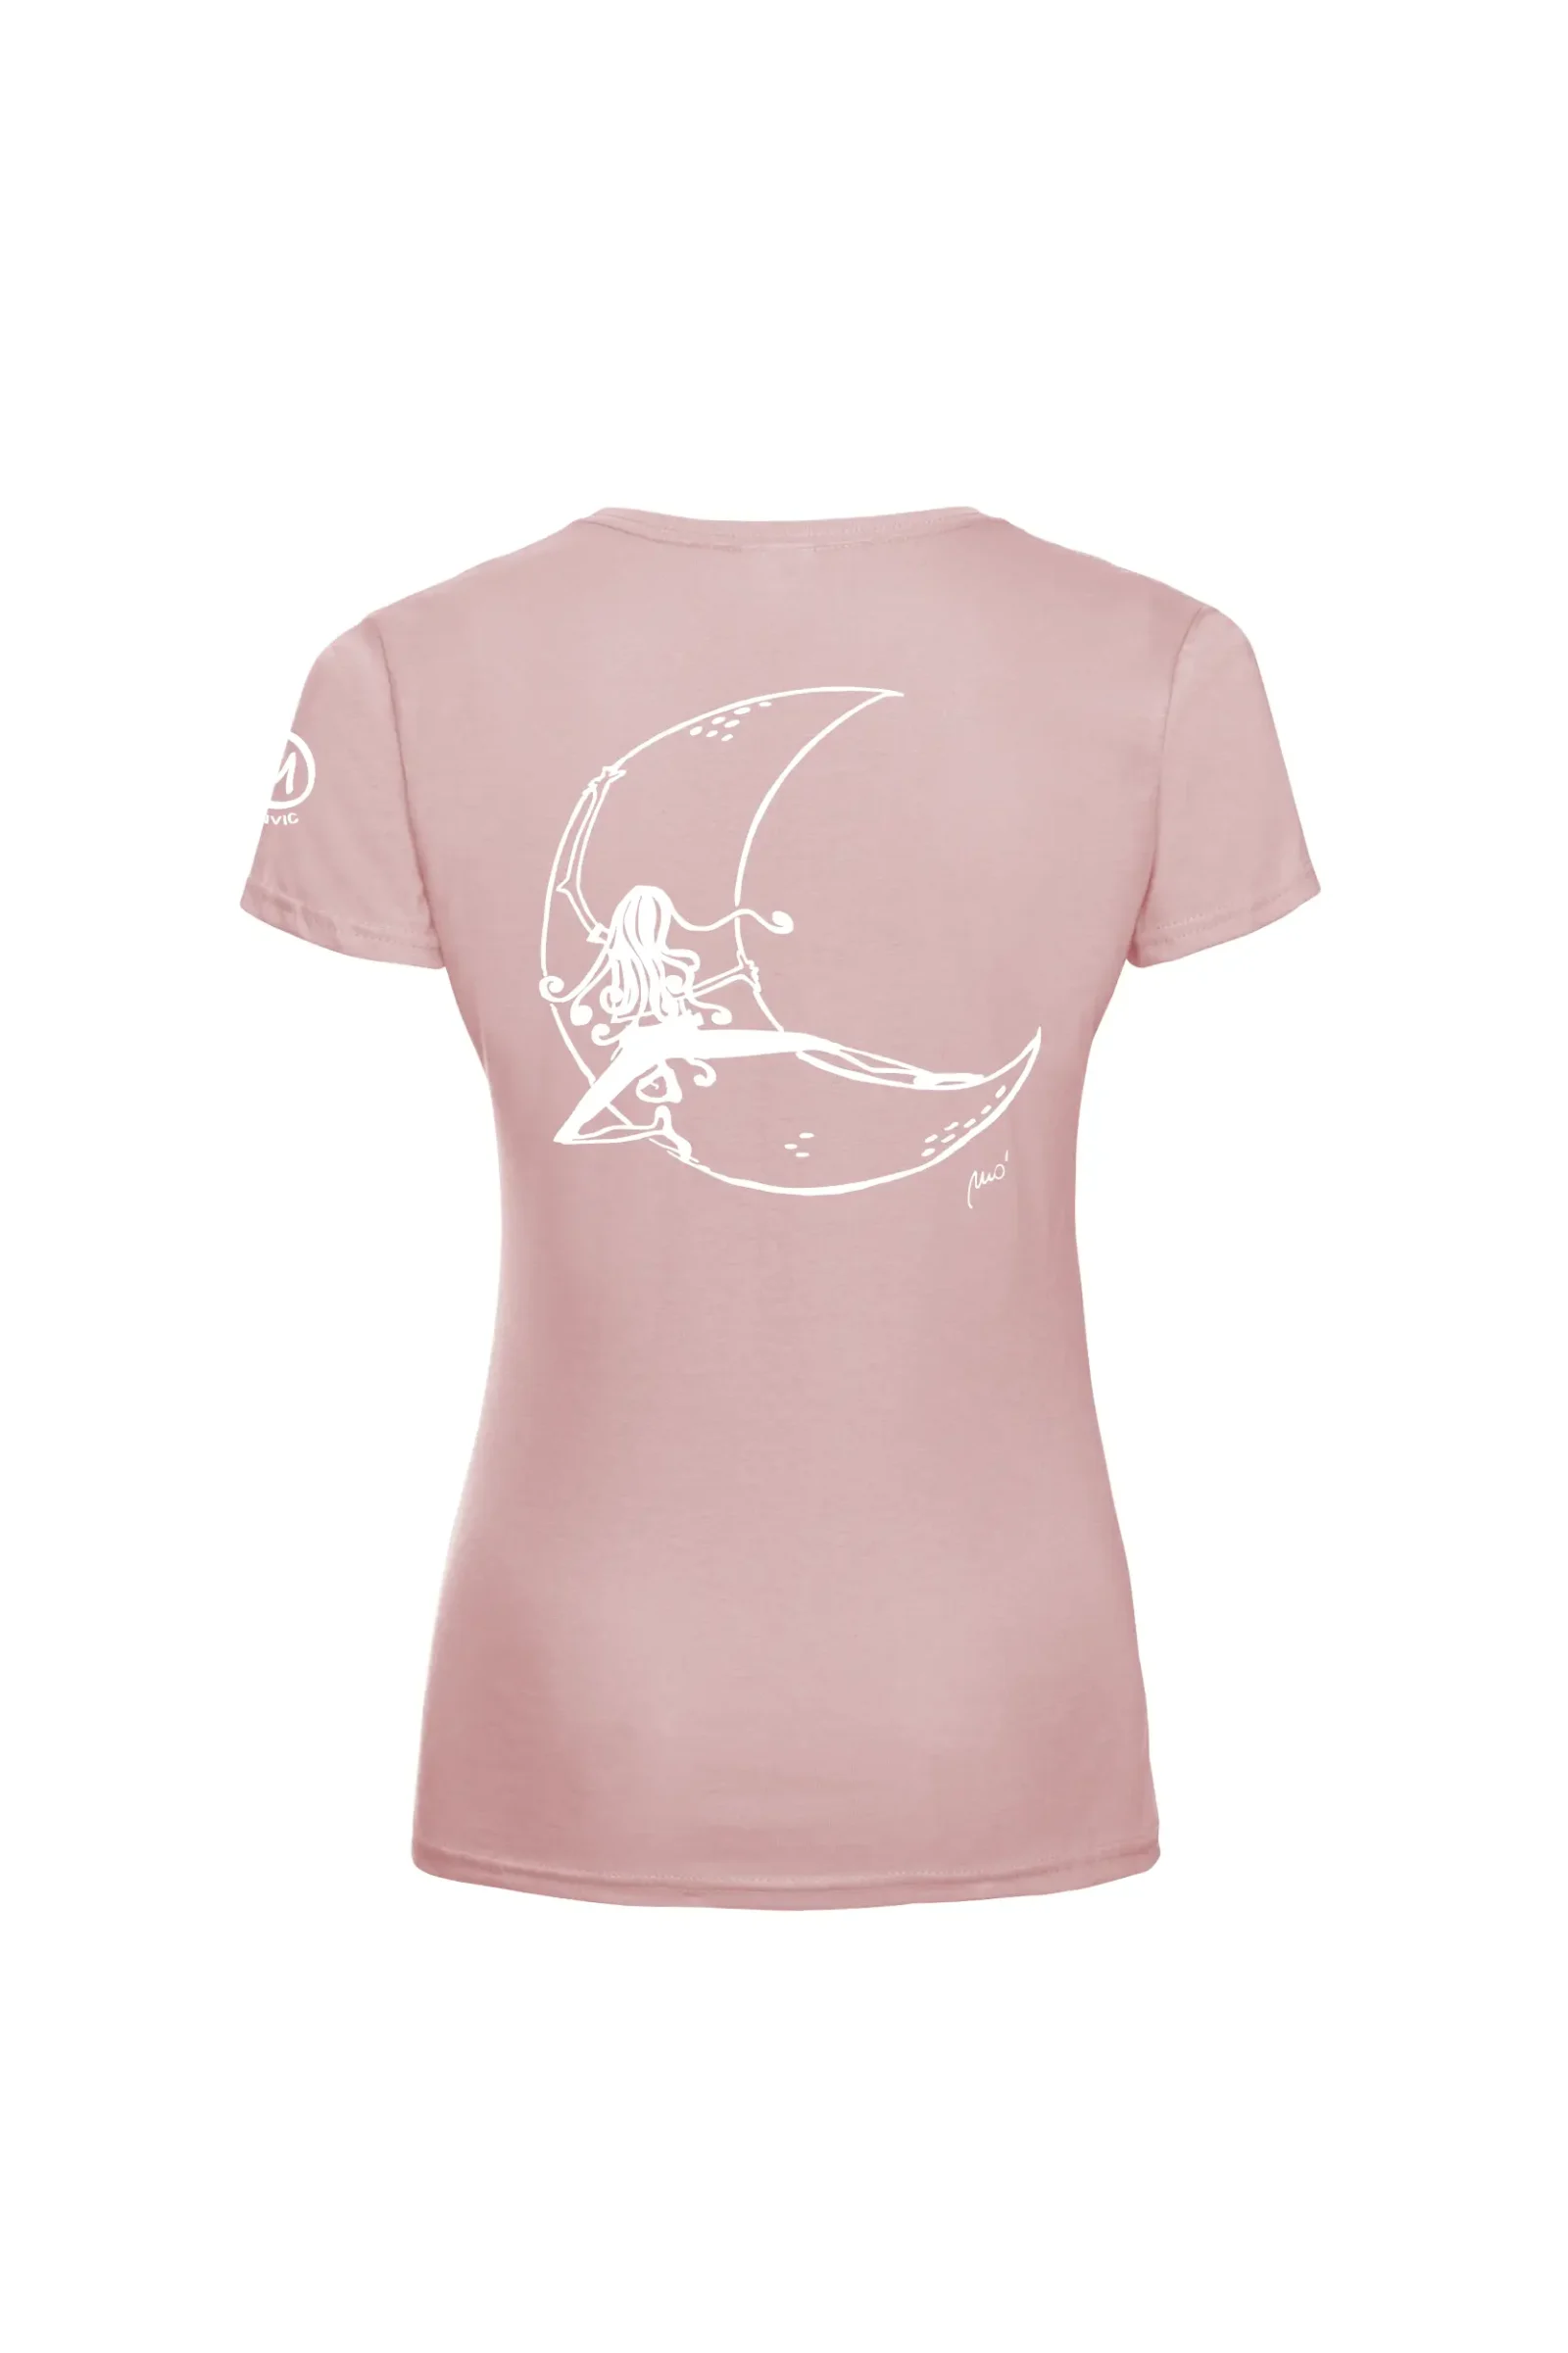 T-shirt escalade femme - coton bio rose - "Moon" - SHARON ORGANIC by MONVIC